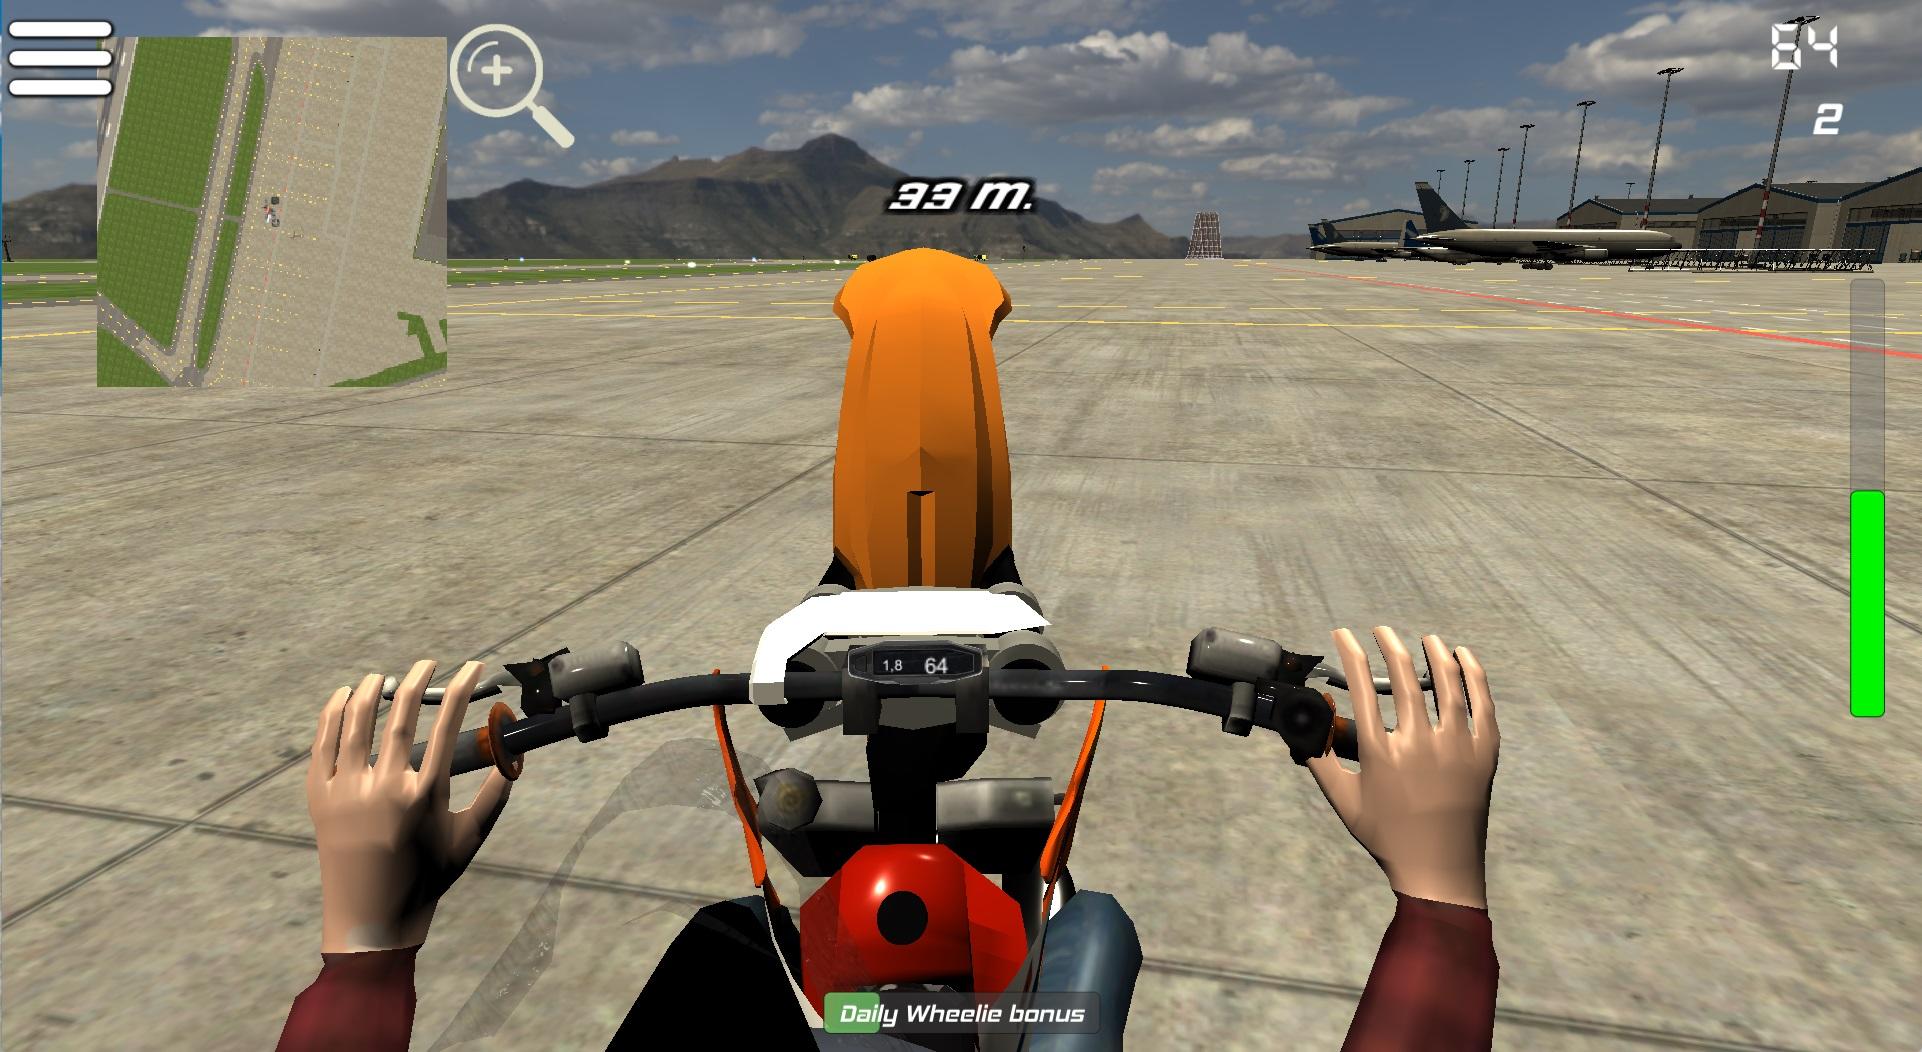 Wheelie King 5 - Mx bikes 2024 screenshot game